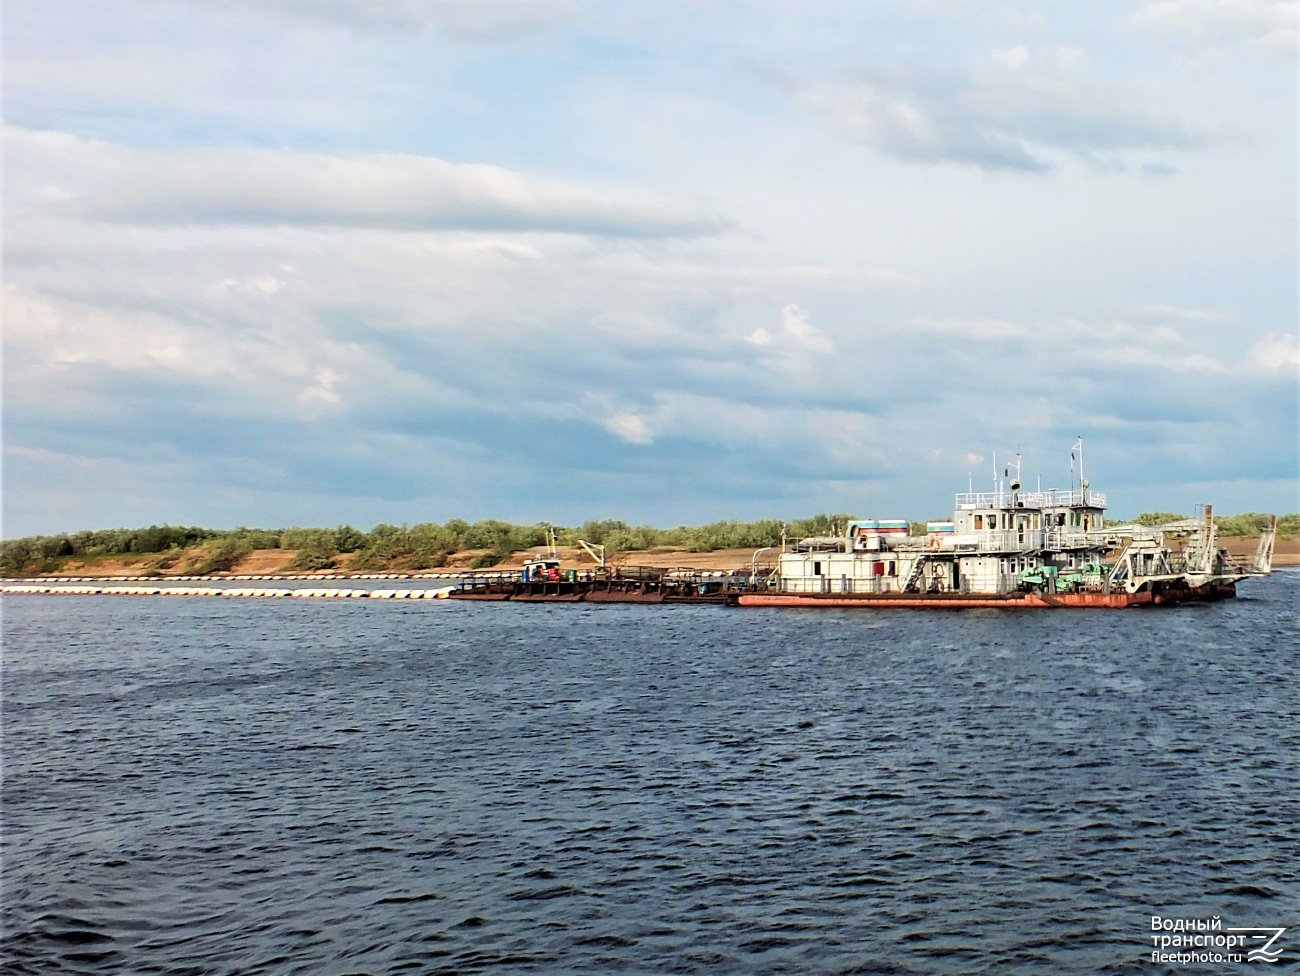 Печорский-311. Unidentified ships